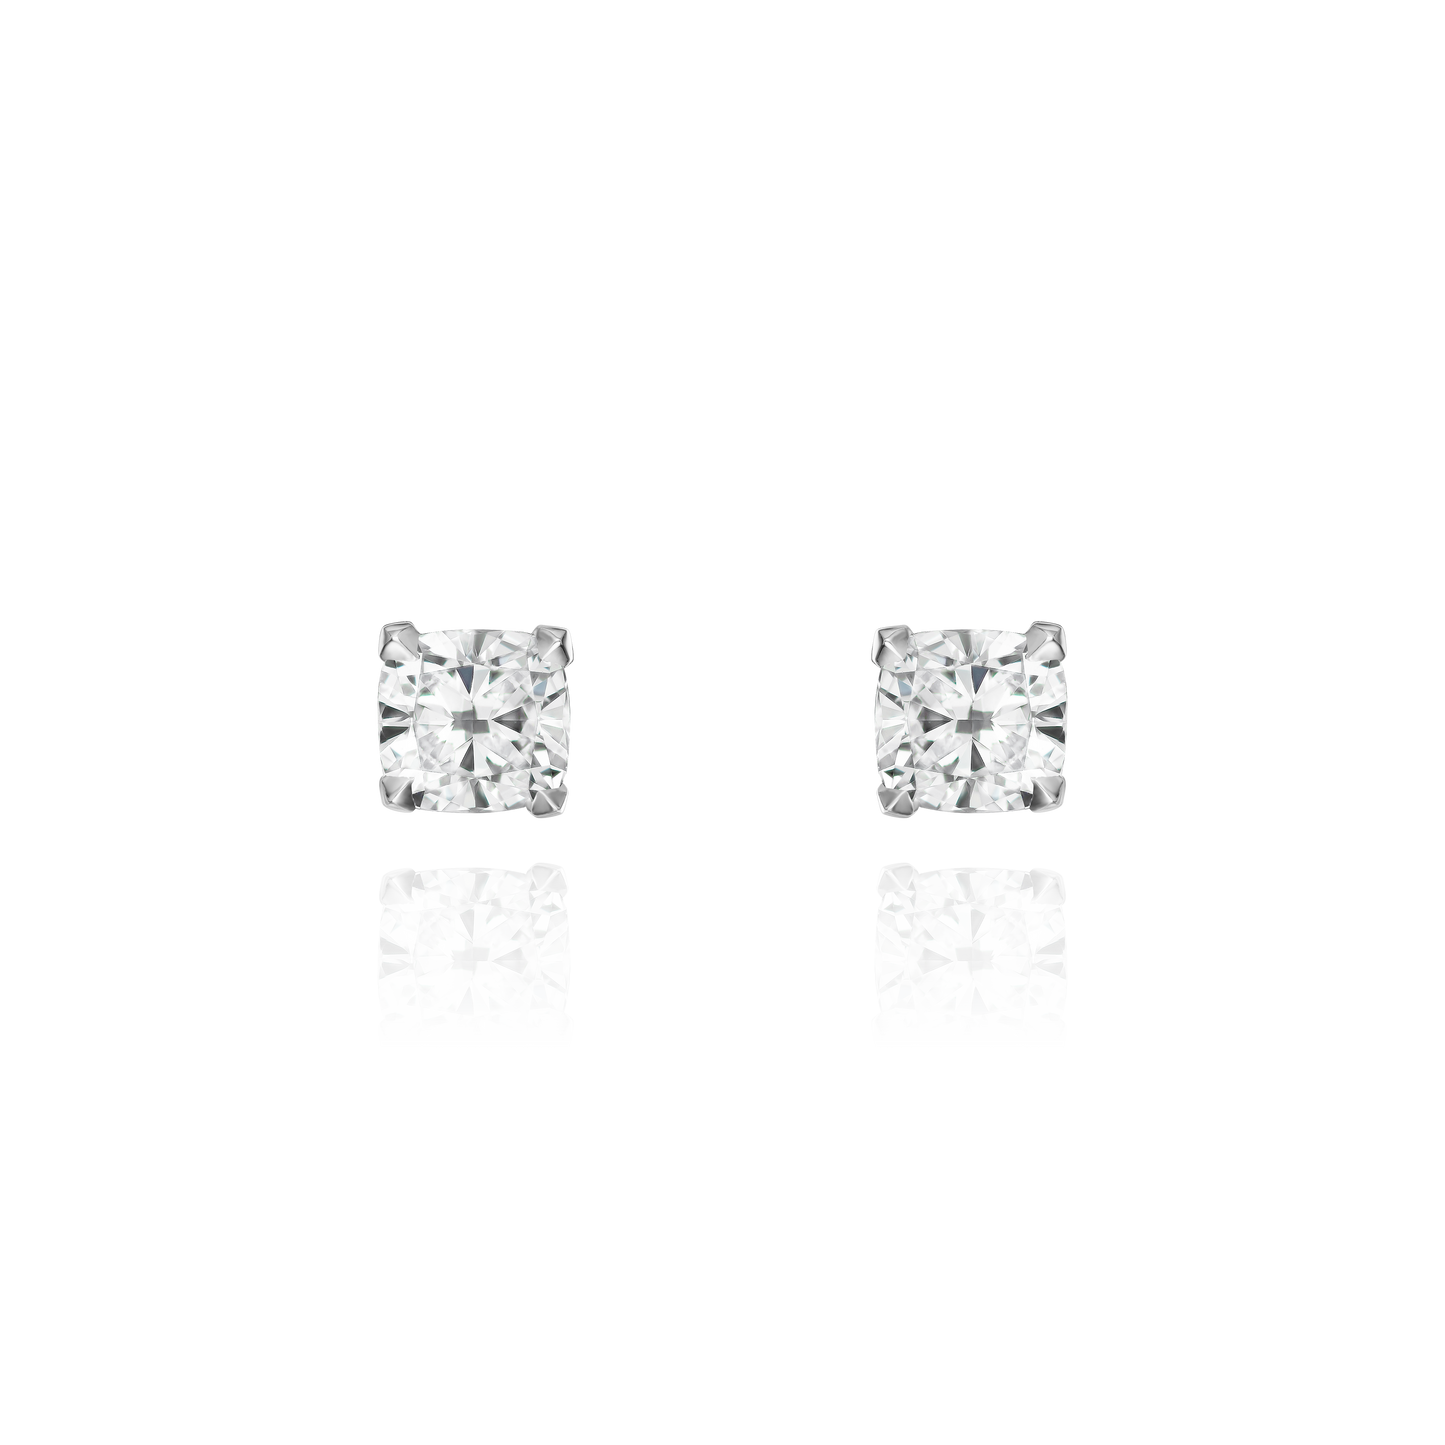 0.61cts Cushion Cut Diamond Stud Earrings